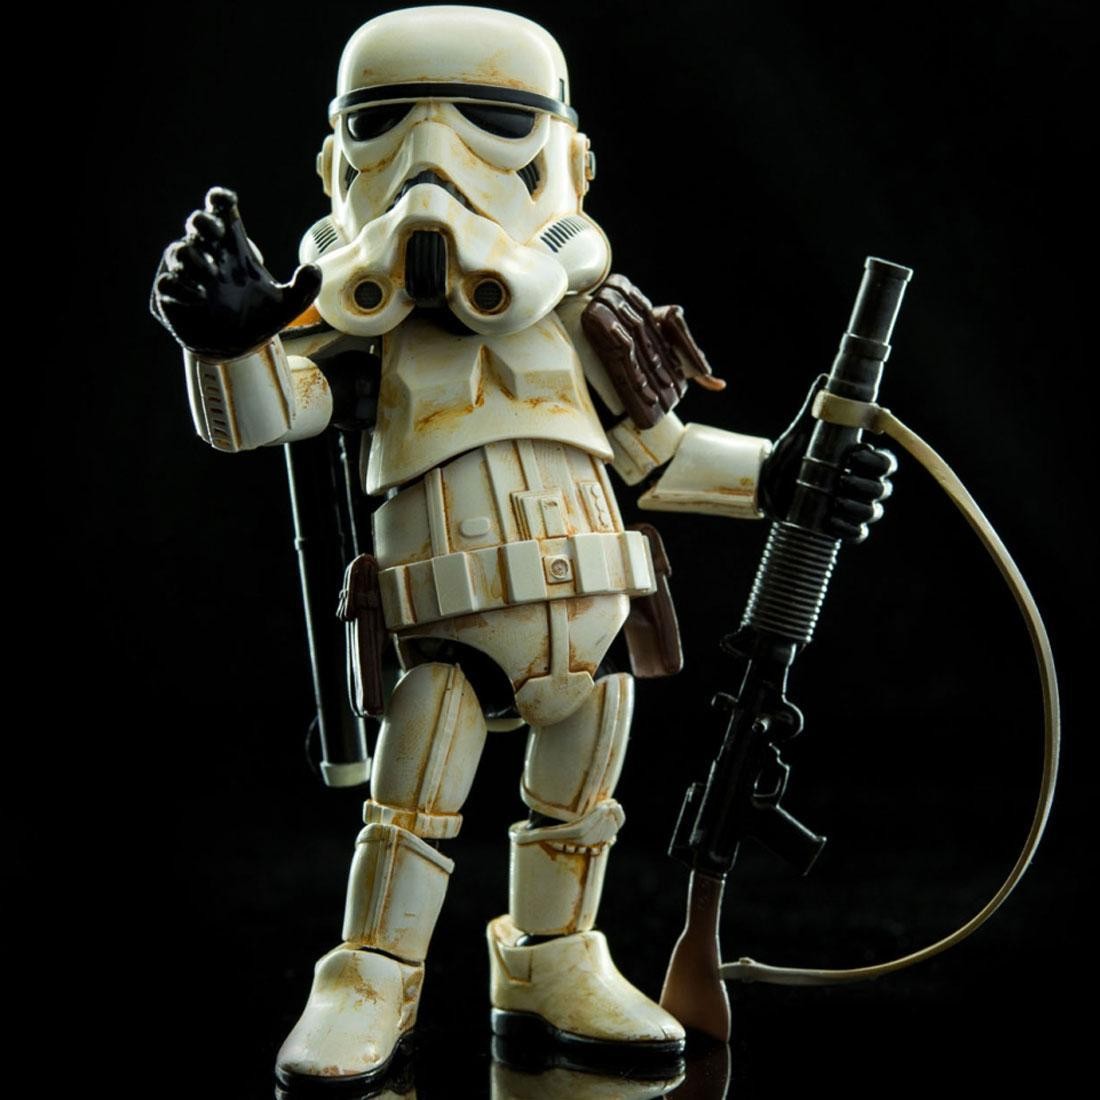 Herocross Hybrid Metal Figuration #019 Star Wars Sandtrooper Diecast Figure (white)